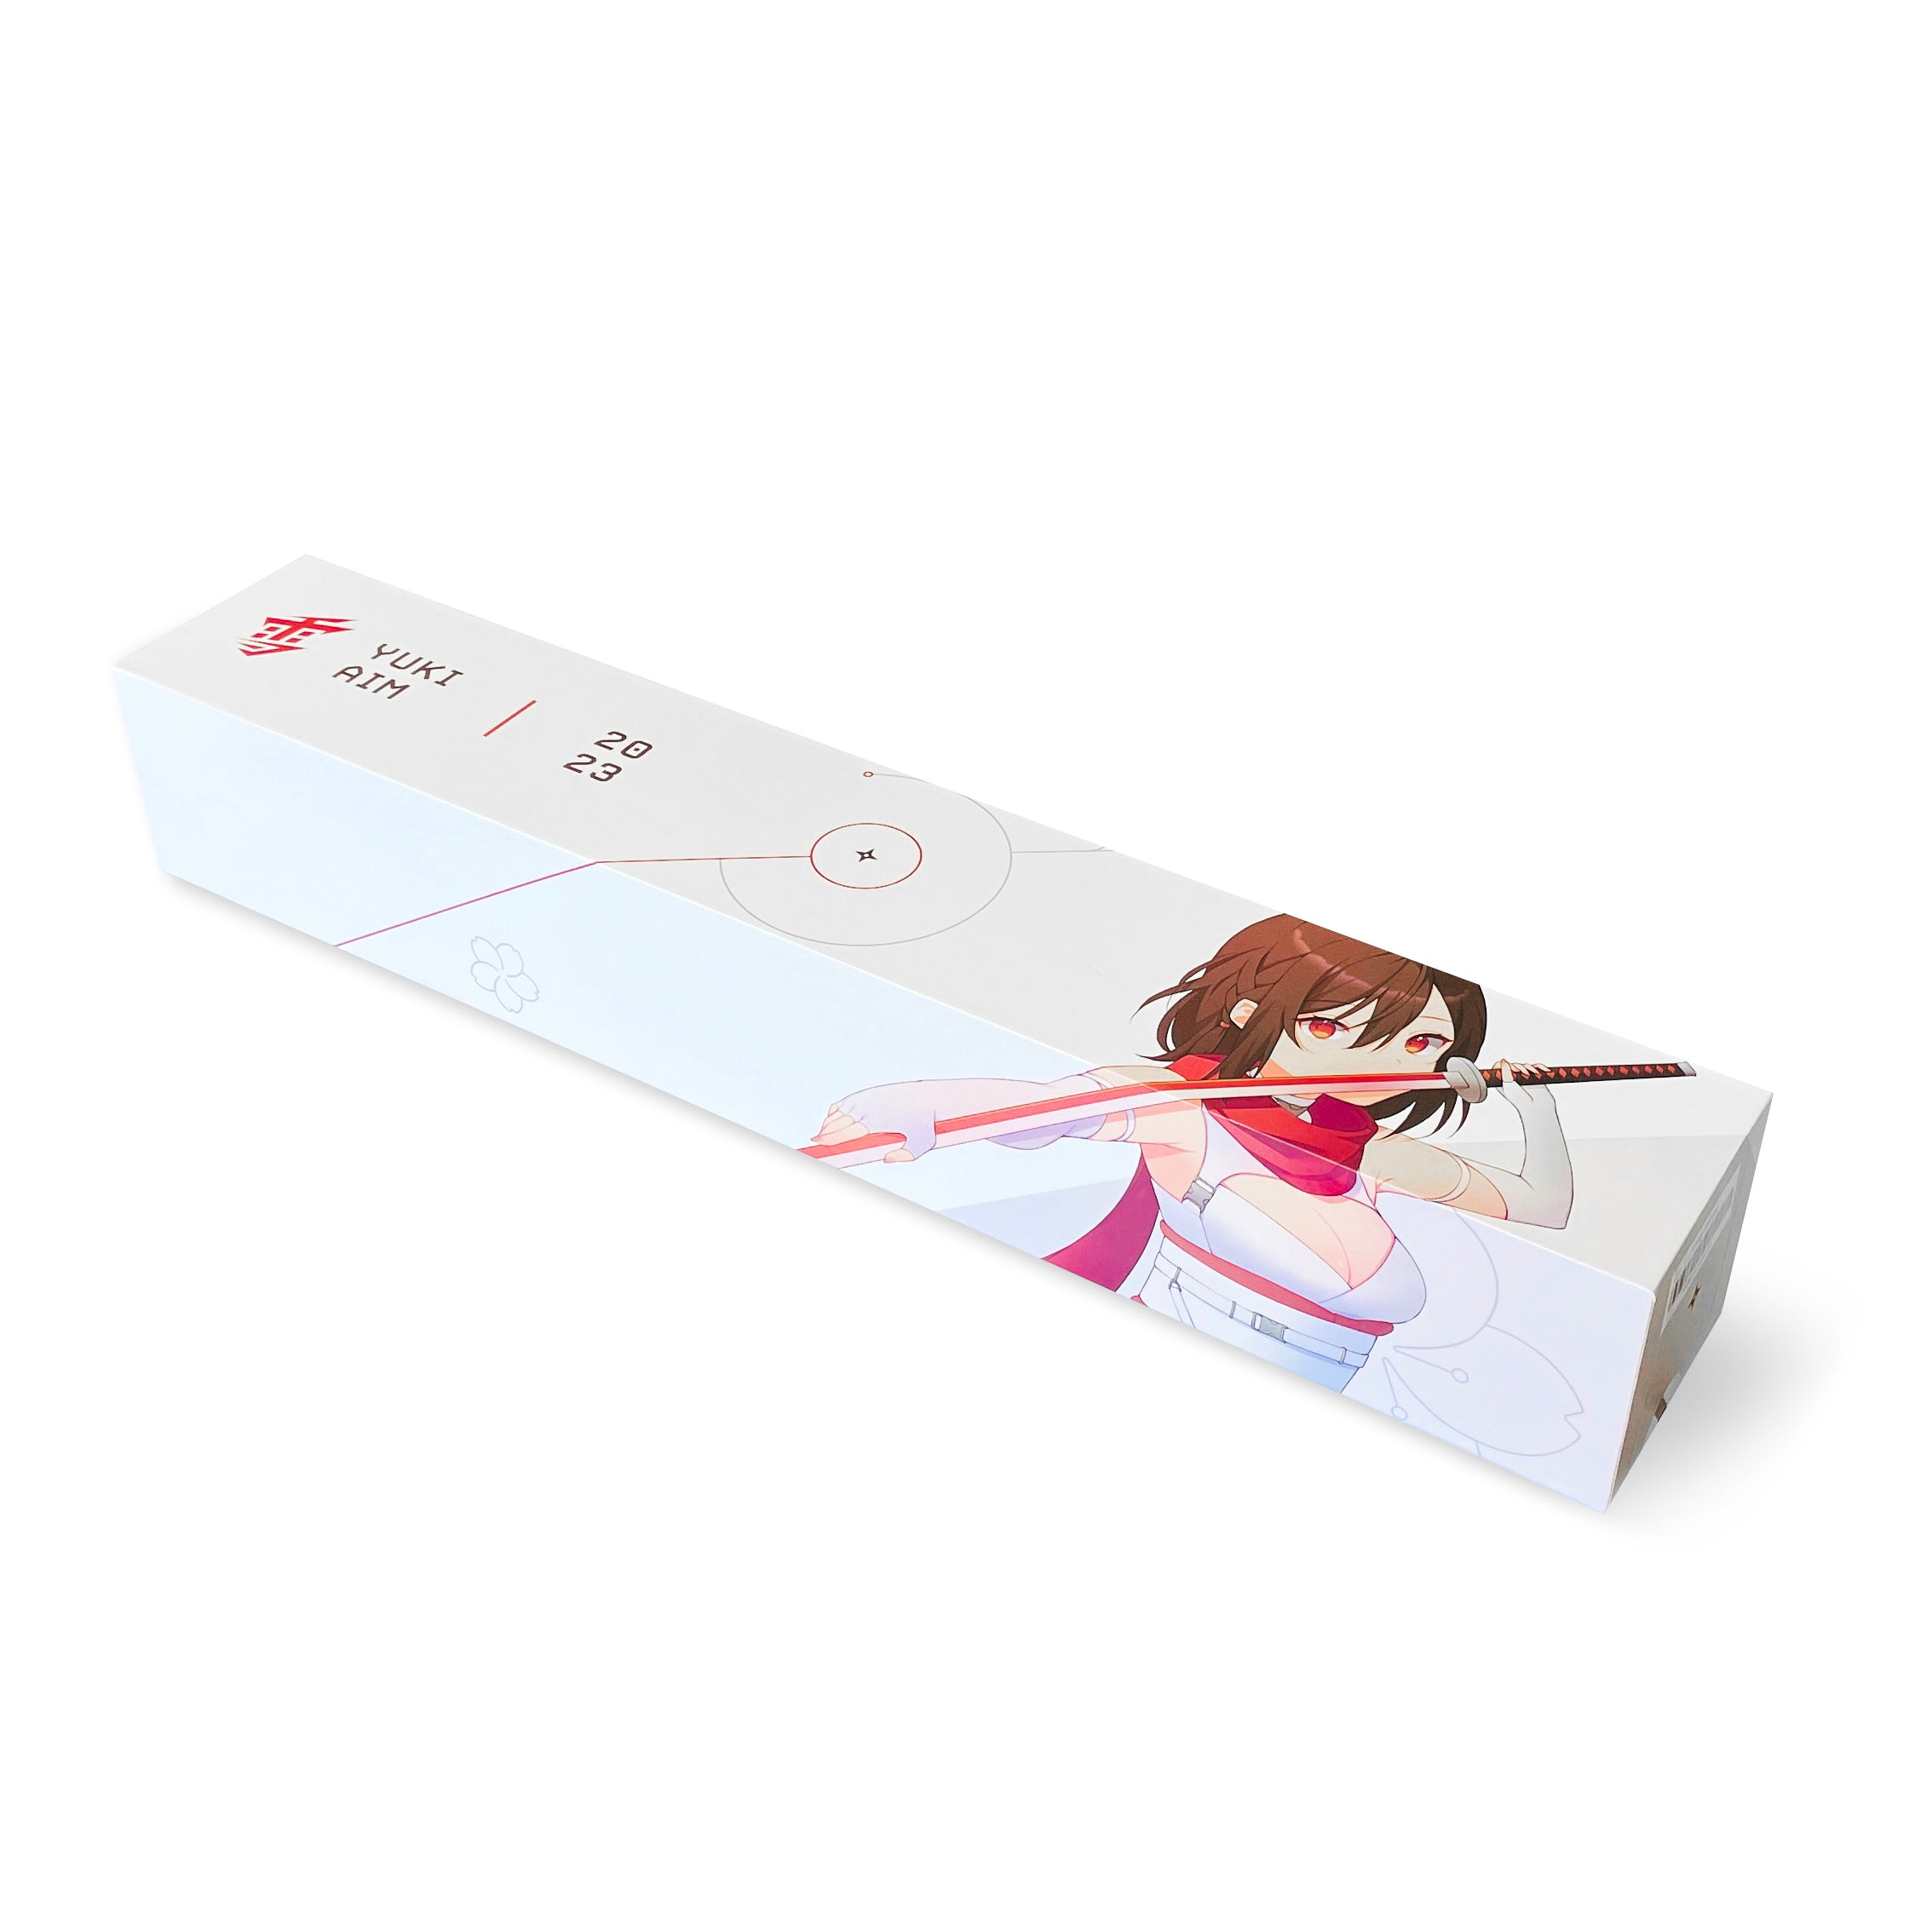 Yuki Aim - 2023 Drop 1 - Katana XL Mousepad Limited (White)